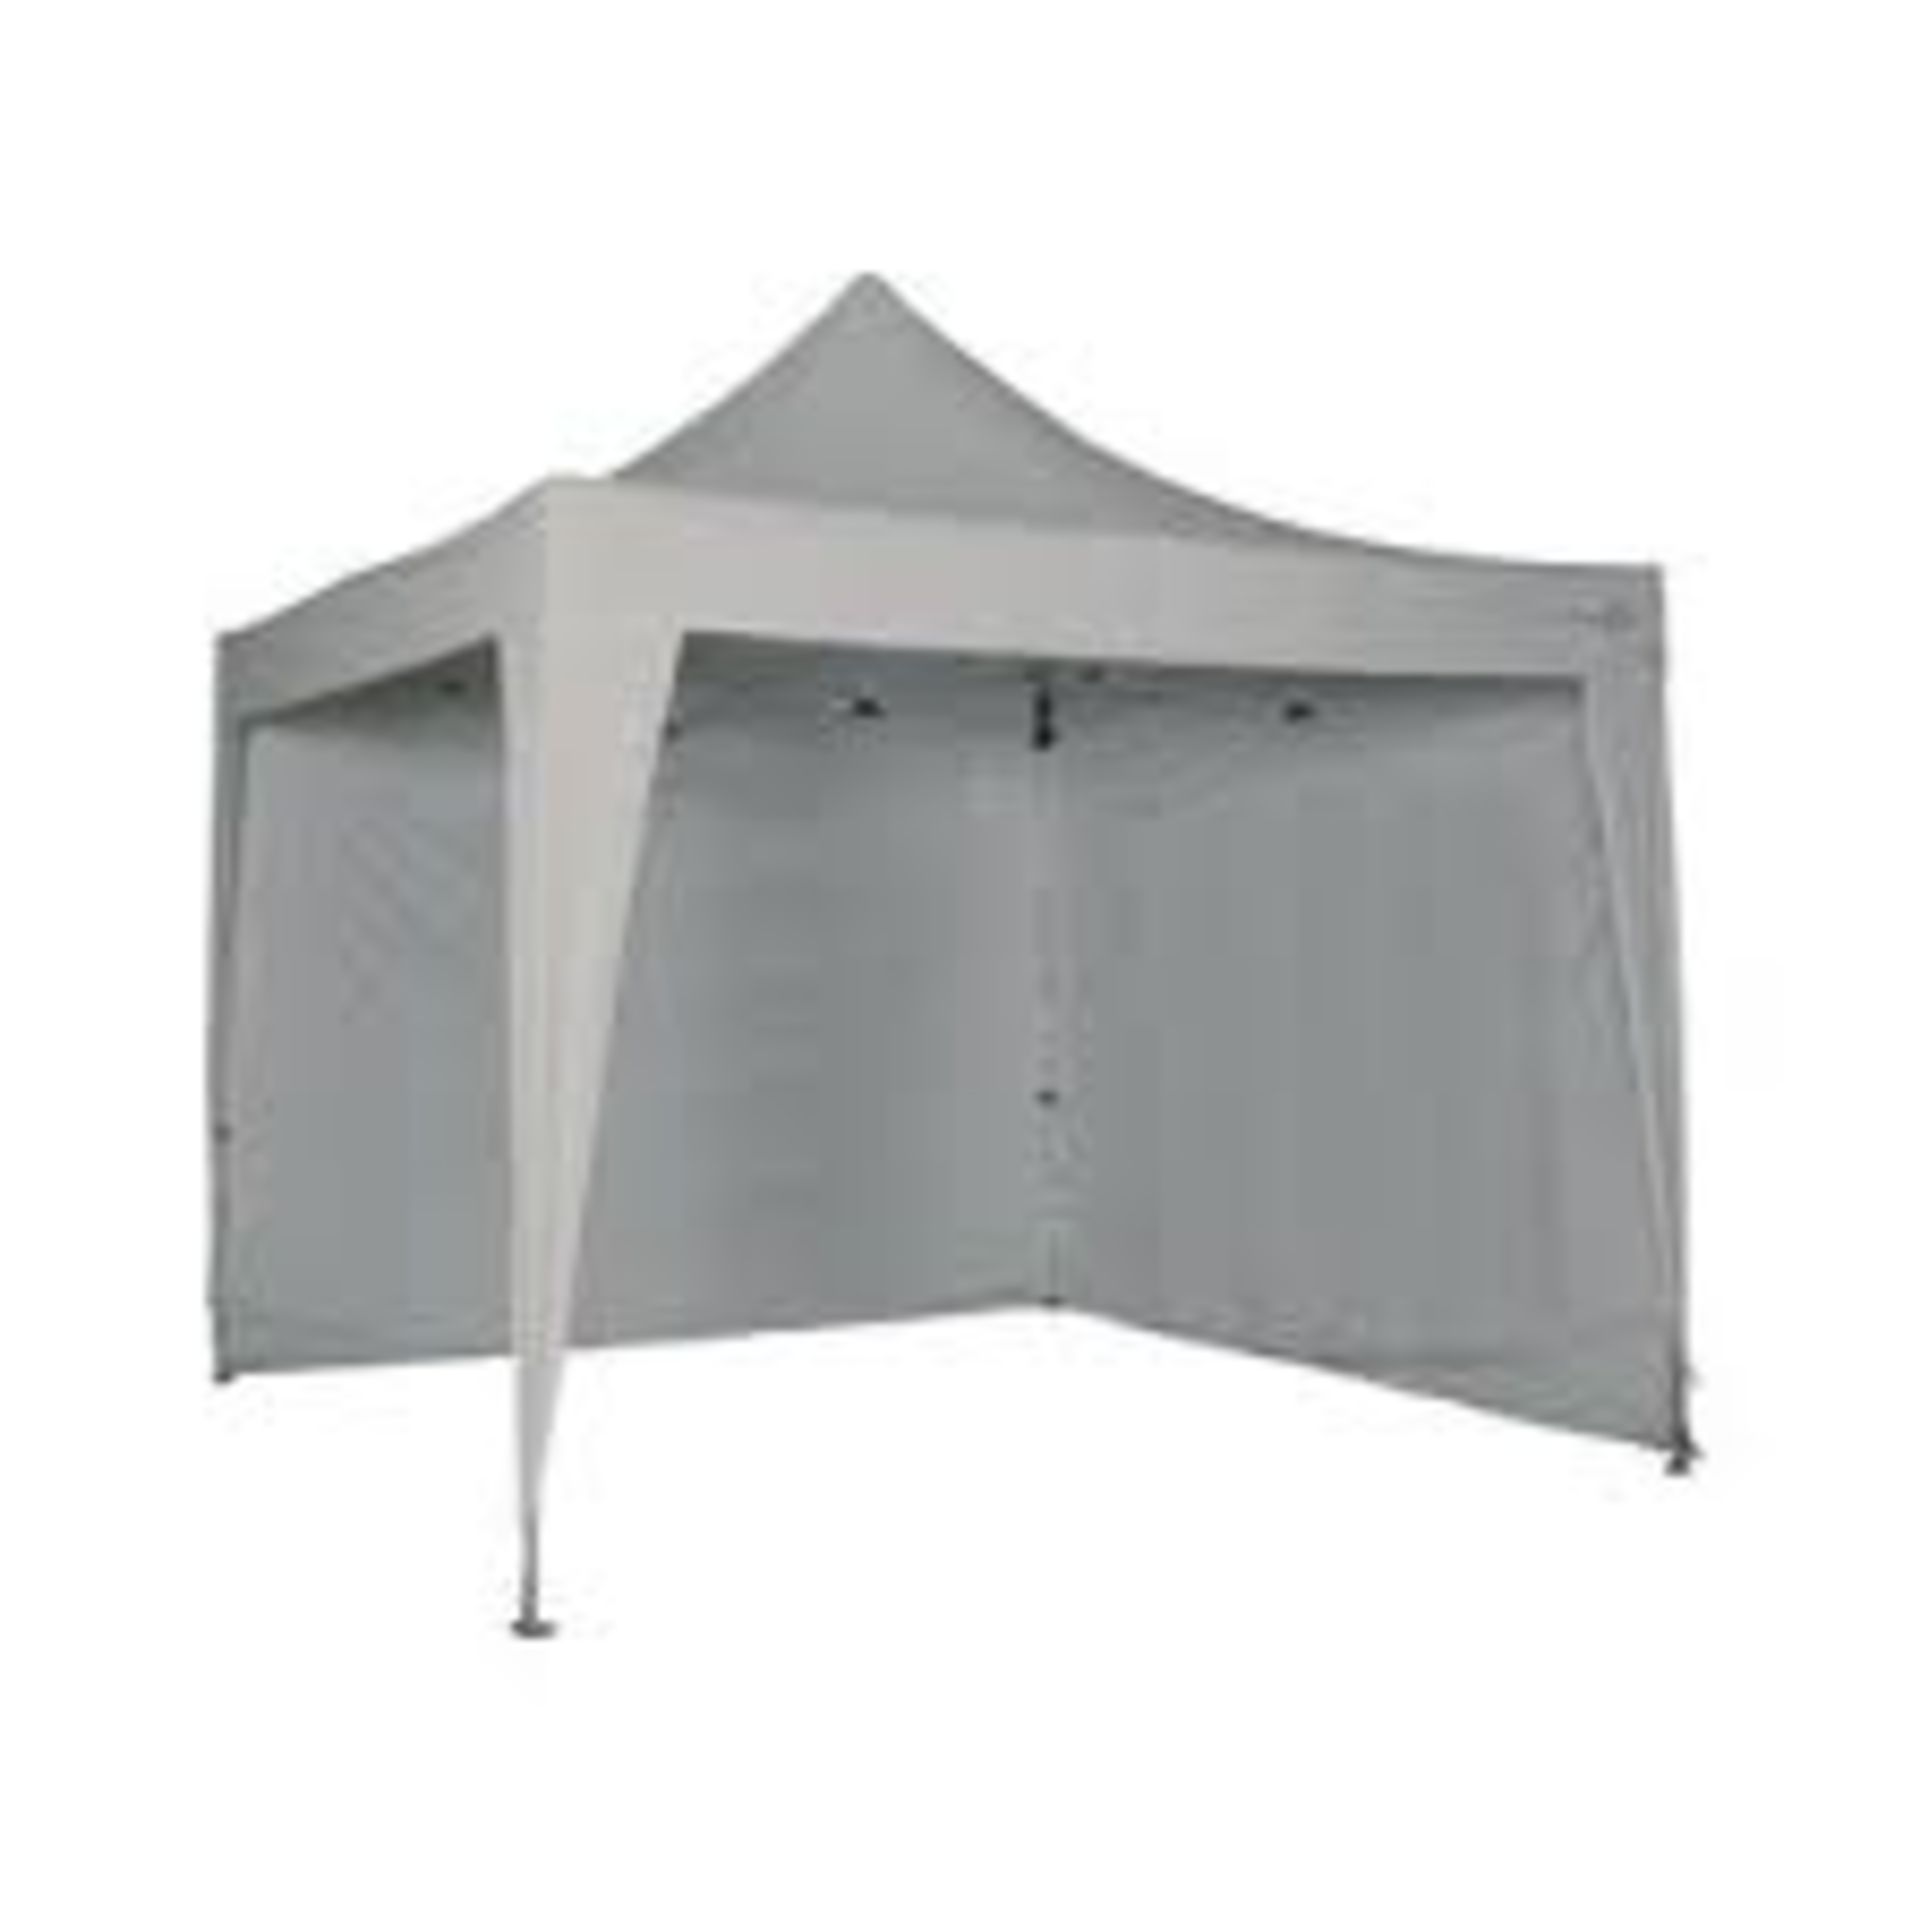 V Brand New DG Pop Up Gazebo With Side Panels 3m x 3m ISP £119.99 (Gala Tent)